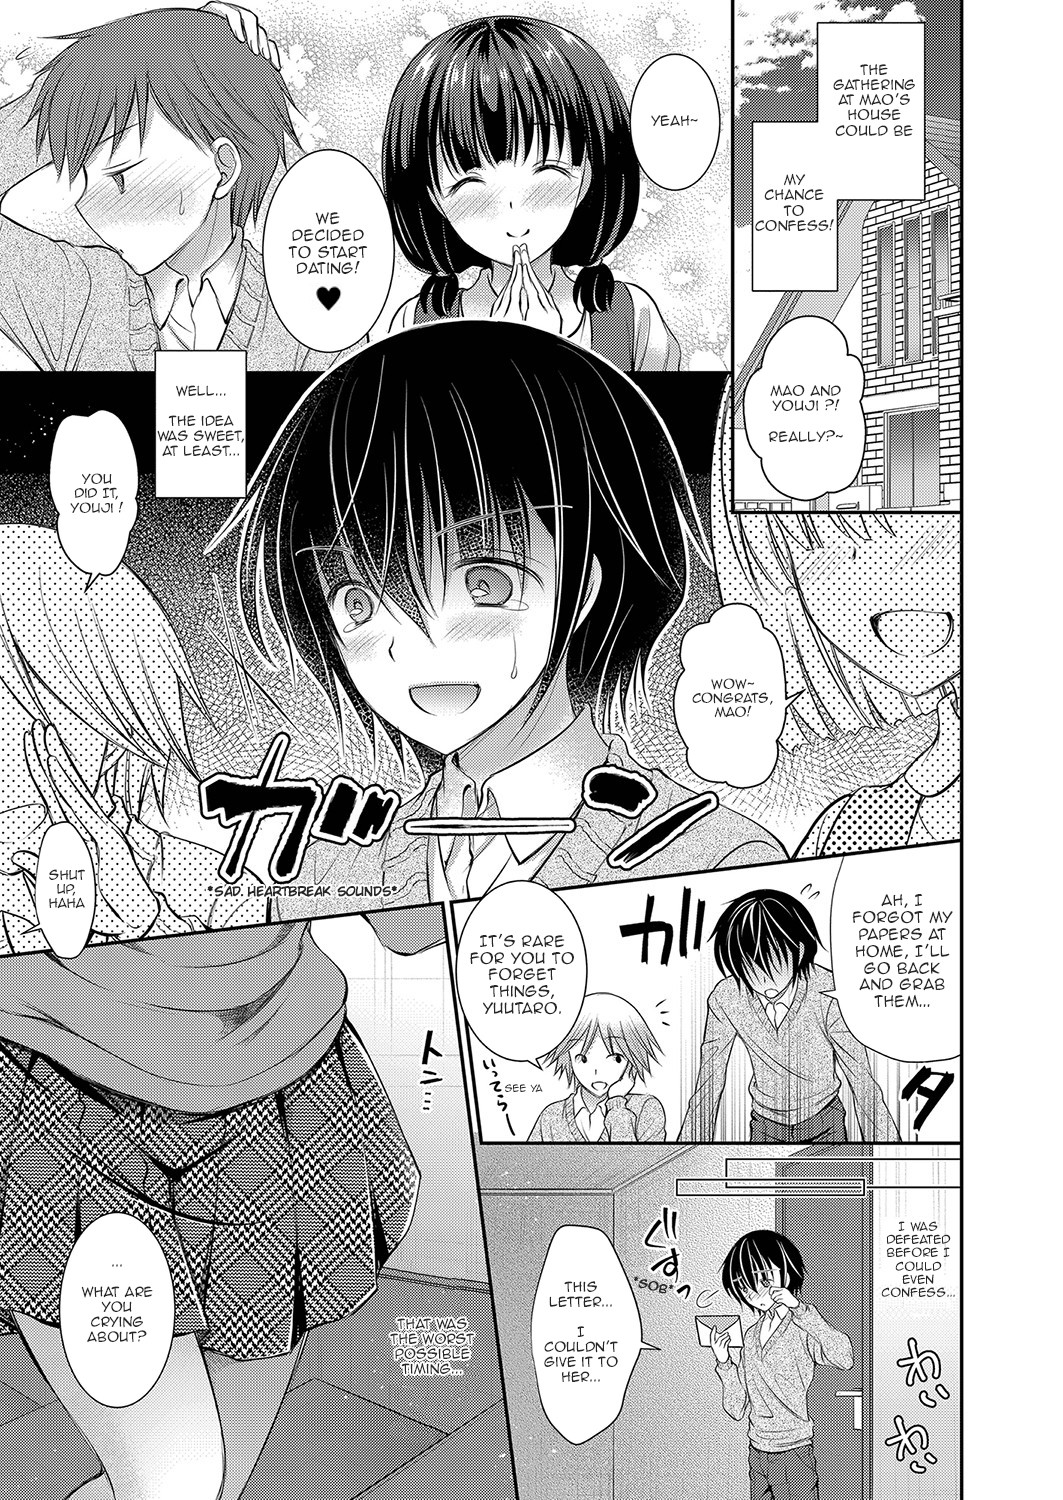 Hentai Manga Comic-The Older Sister of the Girl That I Like-Chapter 1-3